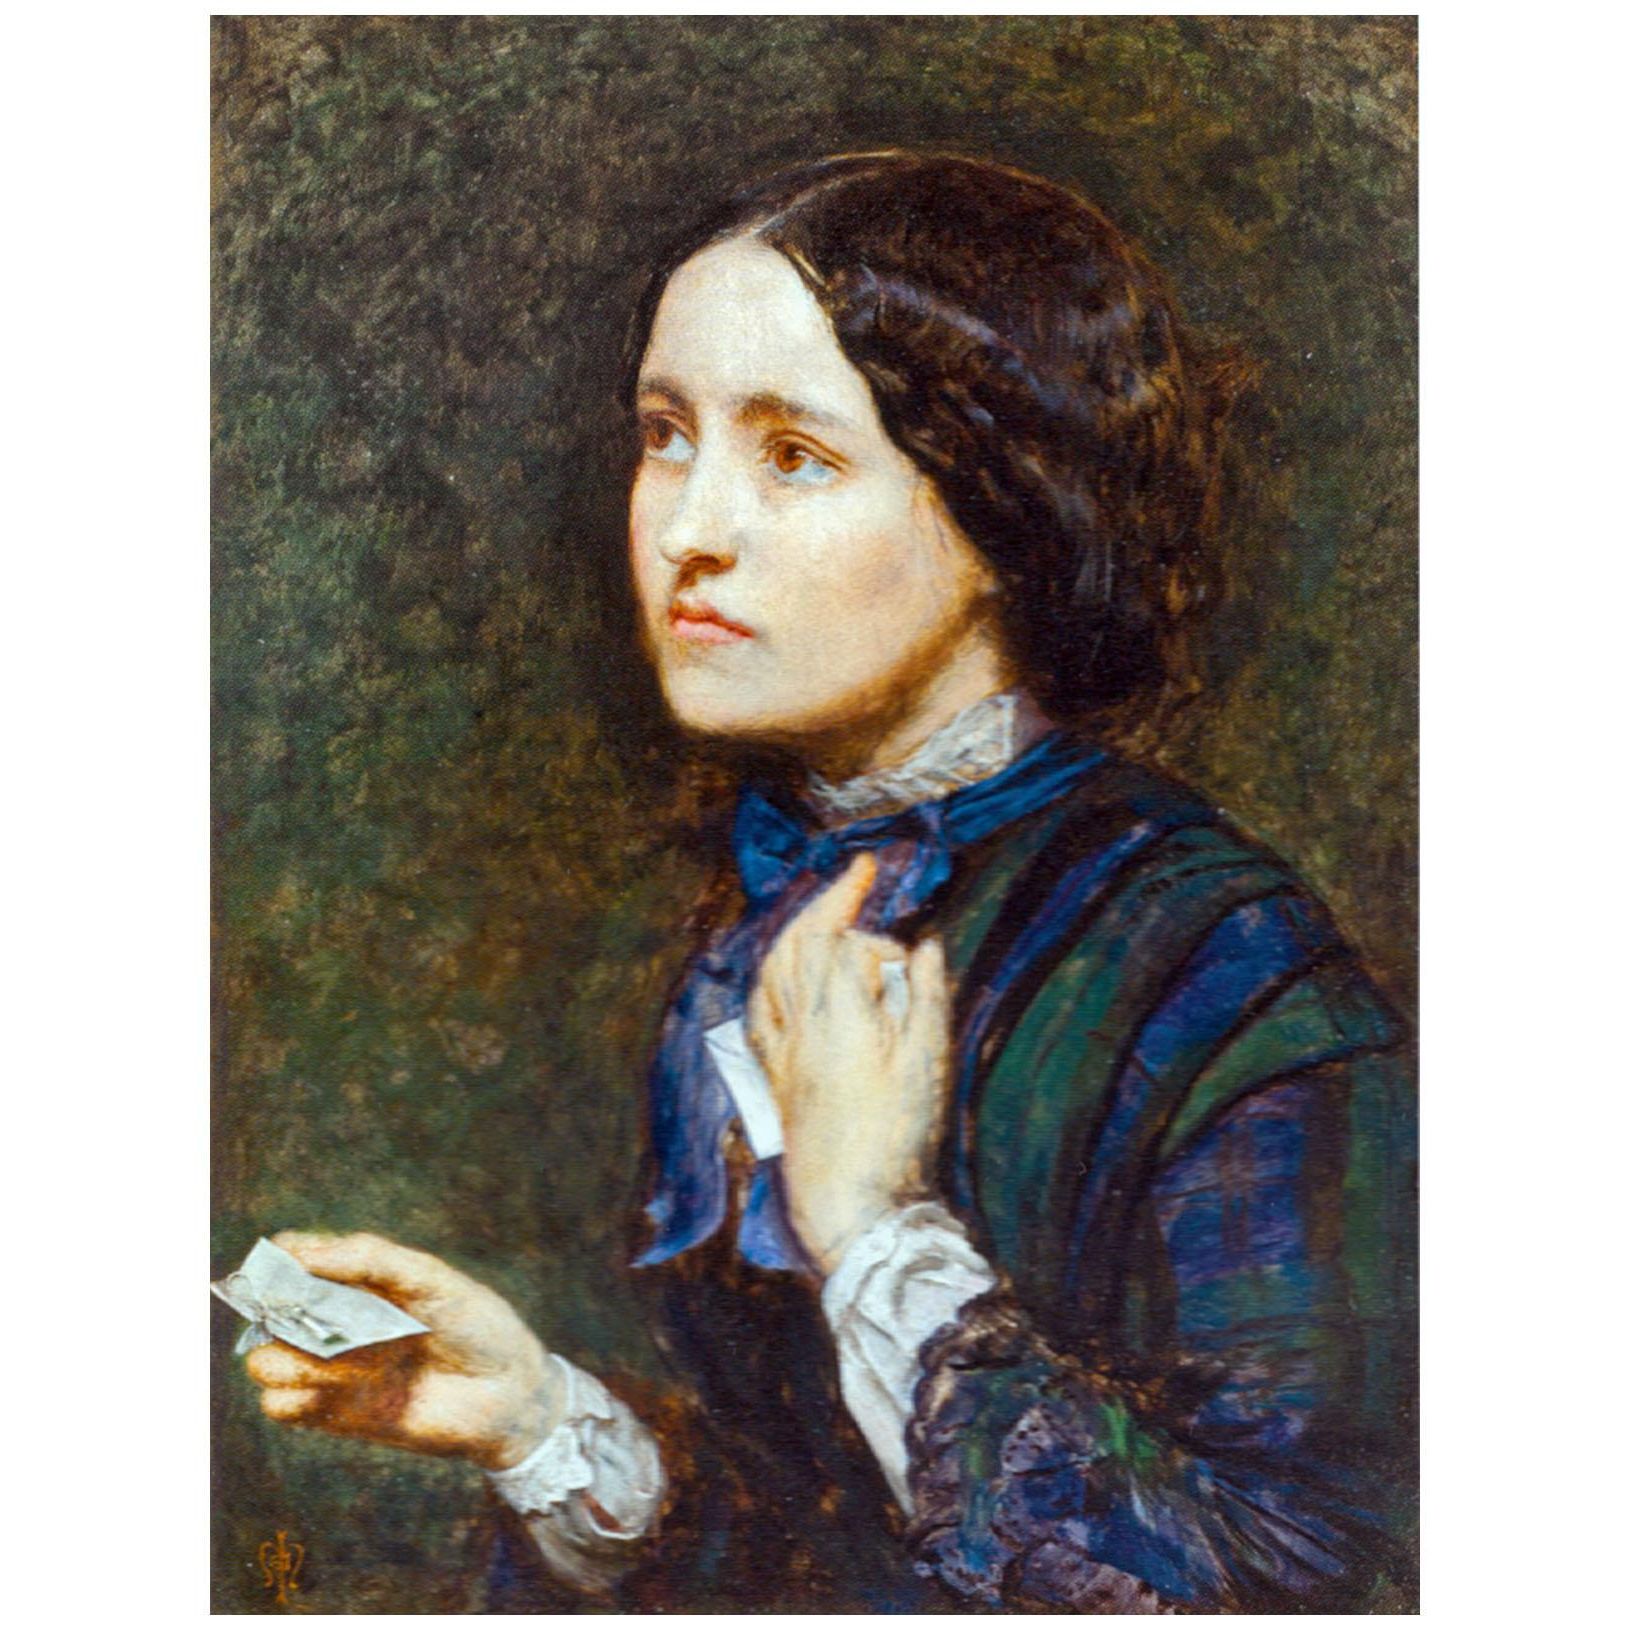 John Everett Millais. Letter (Effie Gray). 1855. Private collection